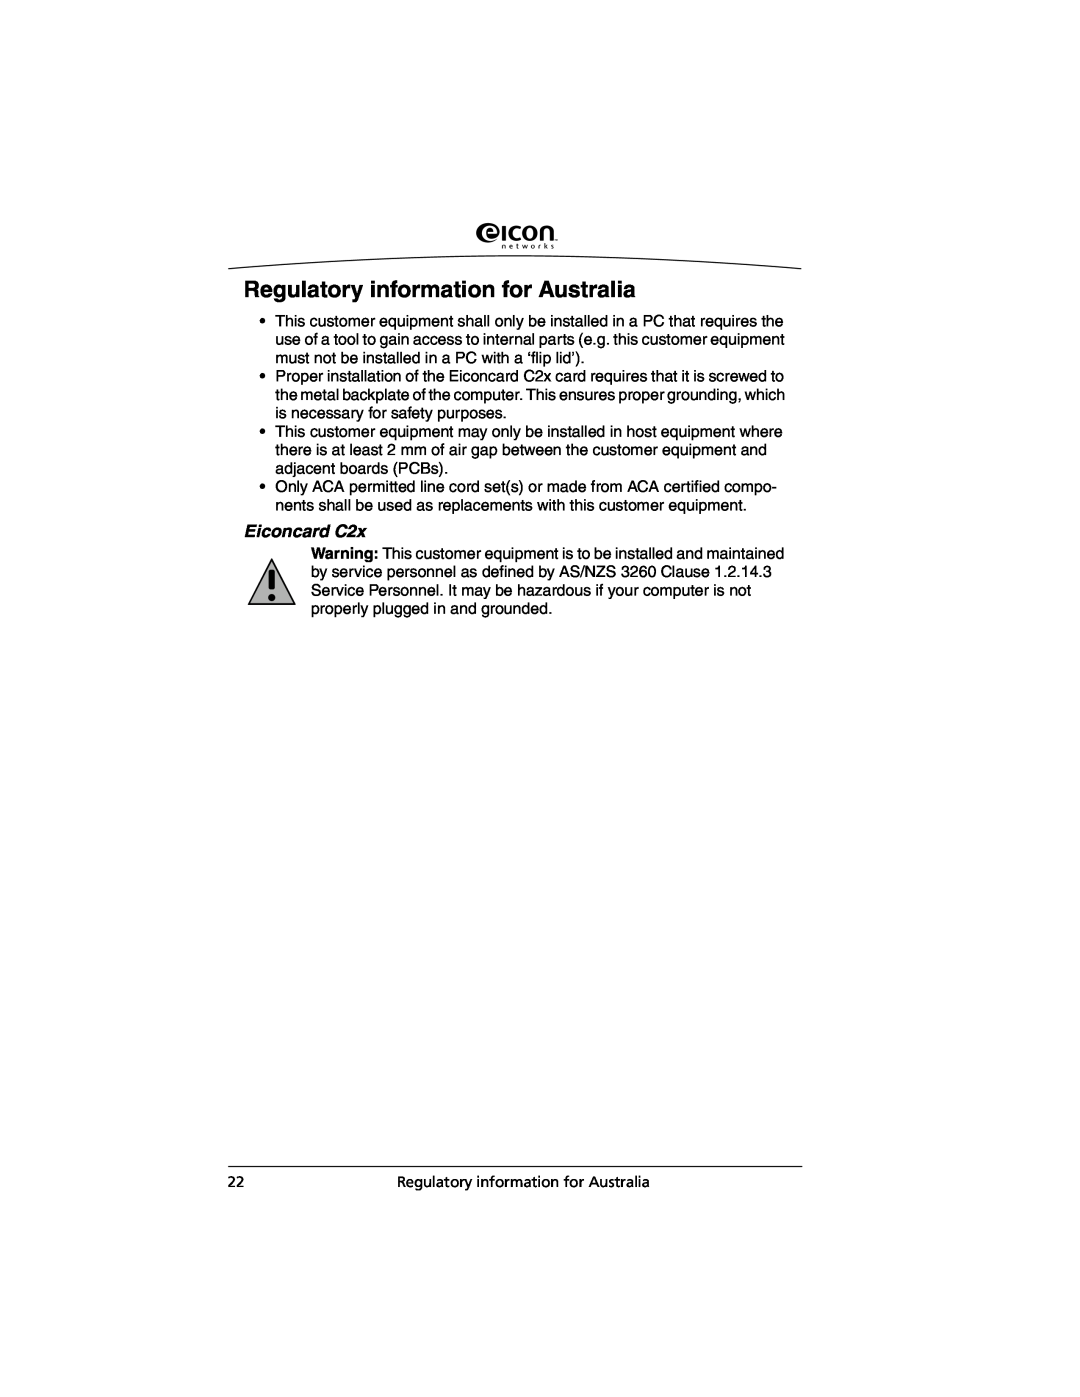 Eicon Networks C2x Family manual Regulatory information for Australia, Eiconcard C2x 